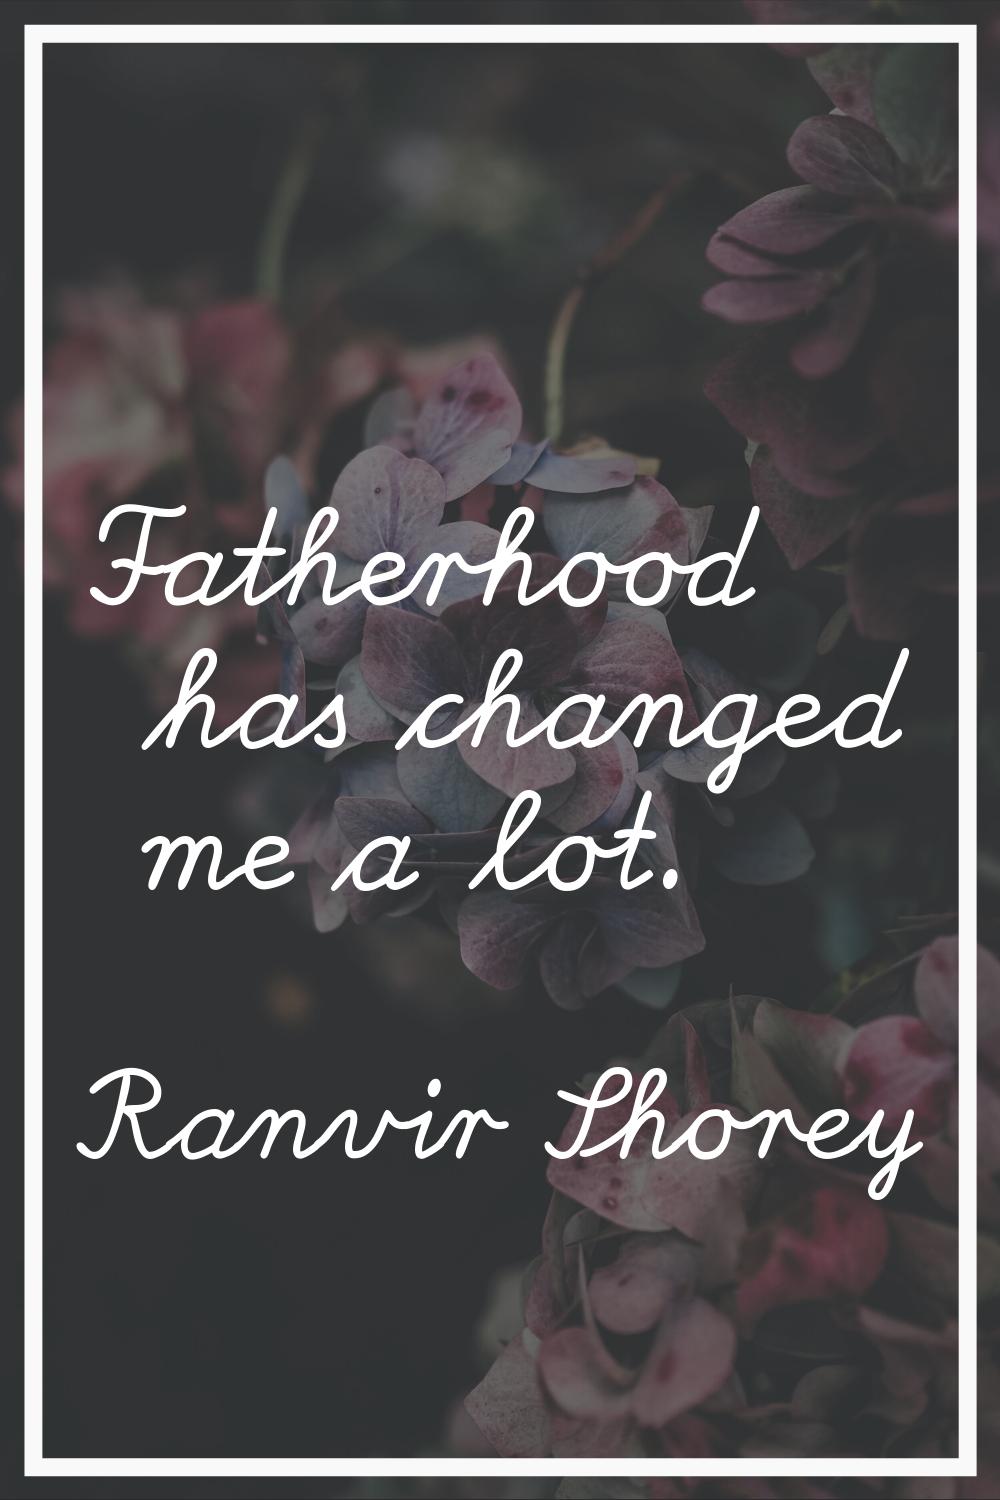 Fatherhood has changed me a lot.